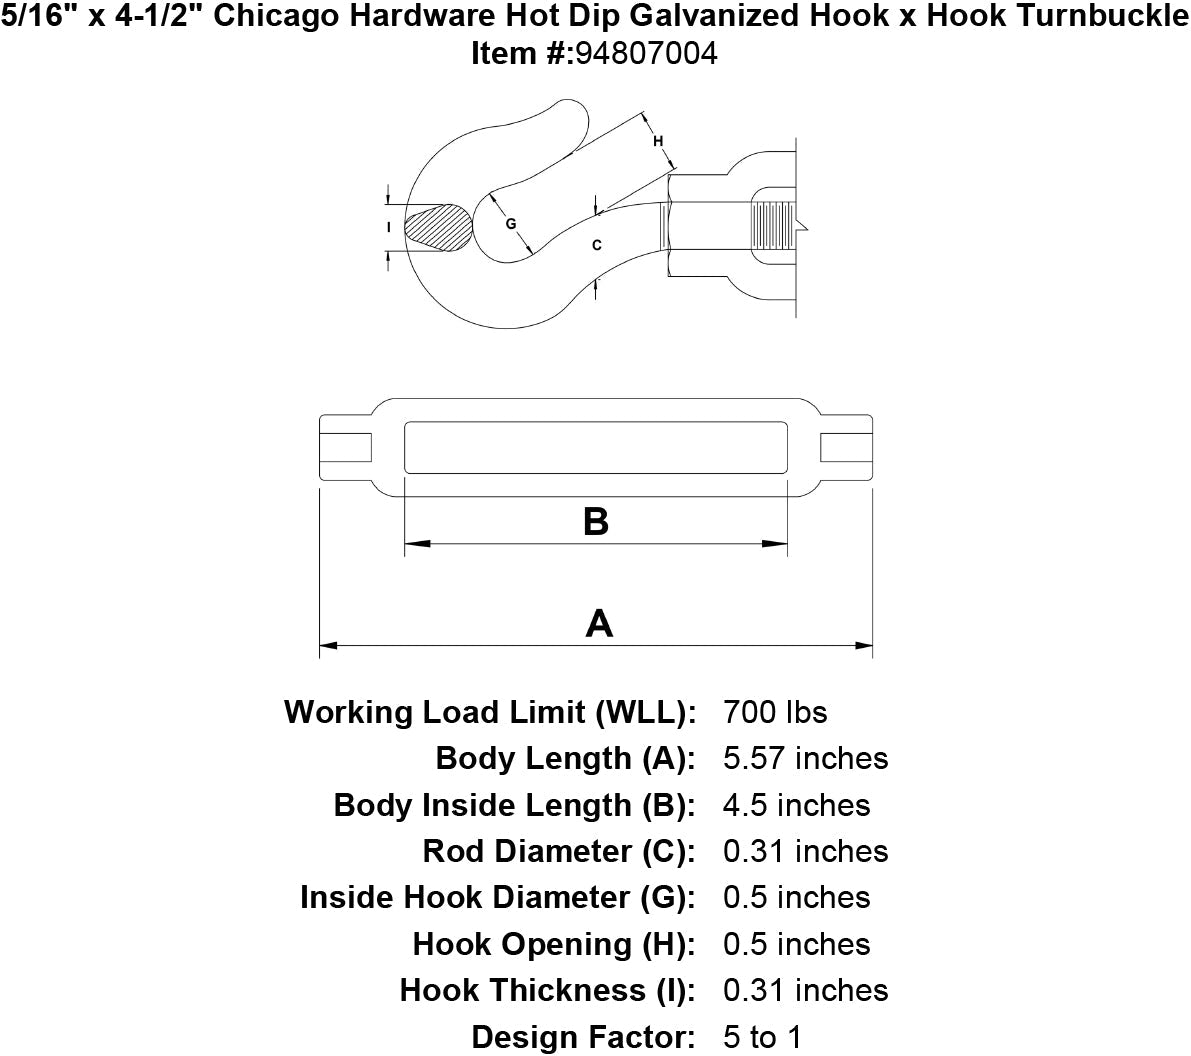 Chicago Hardware Hot Dip Galvanized Hook x Hook Turnbuckles